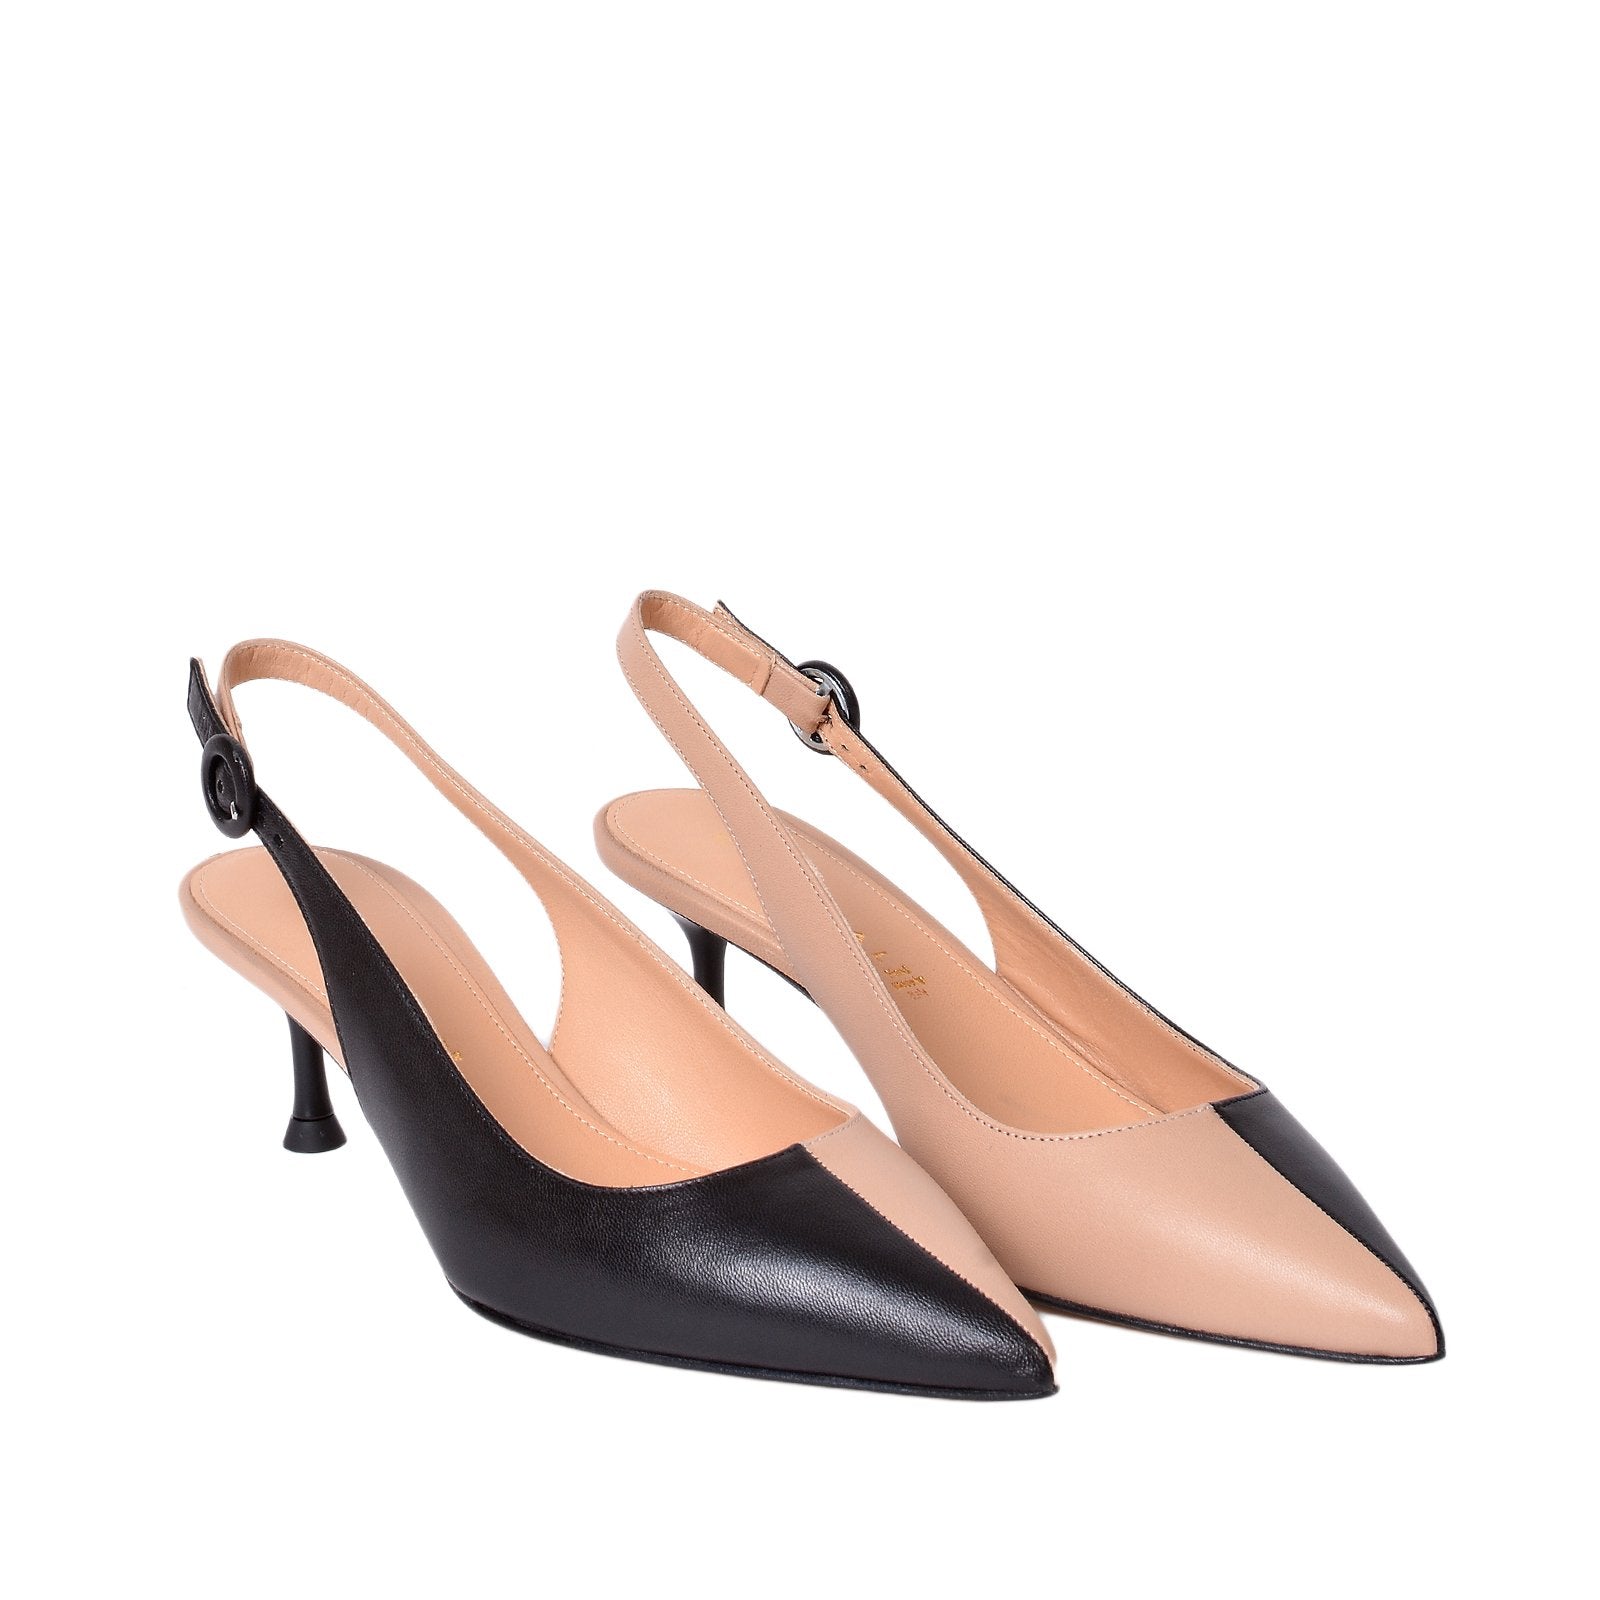 Capretto Two-Tone Sling Back Heeled Shoes Heels 1003/Black-Beige - 3